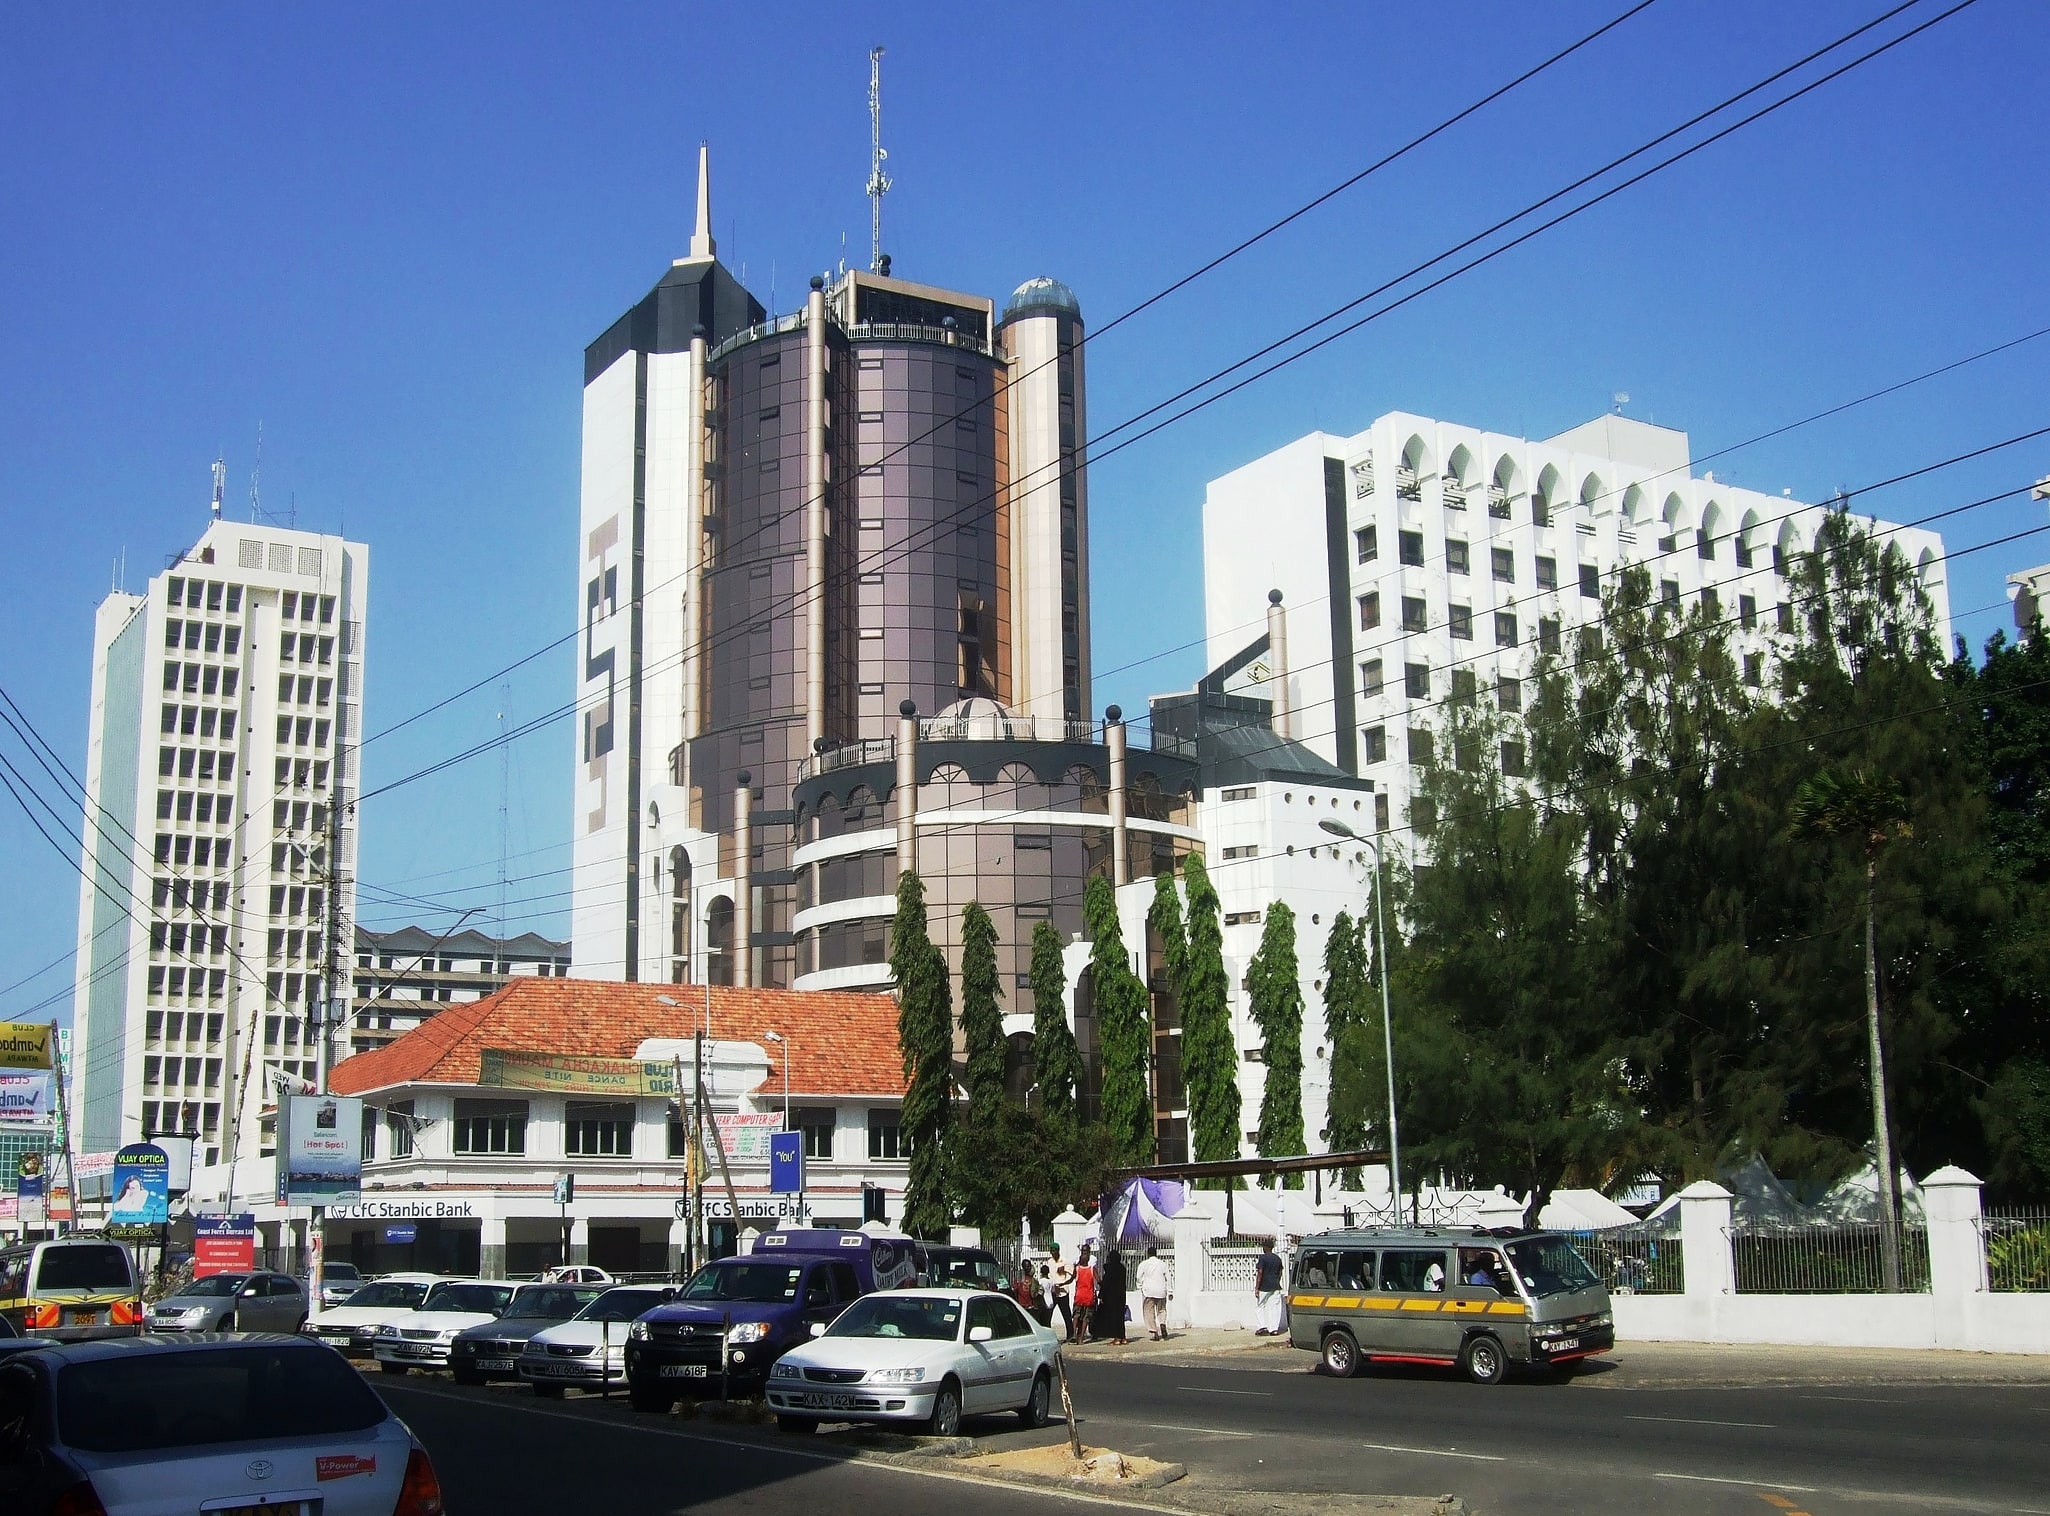 Mombasa, Kenia